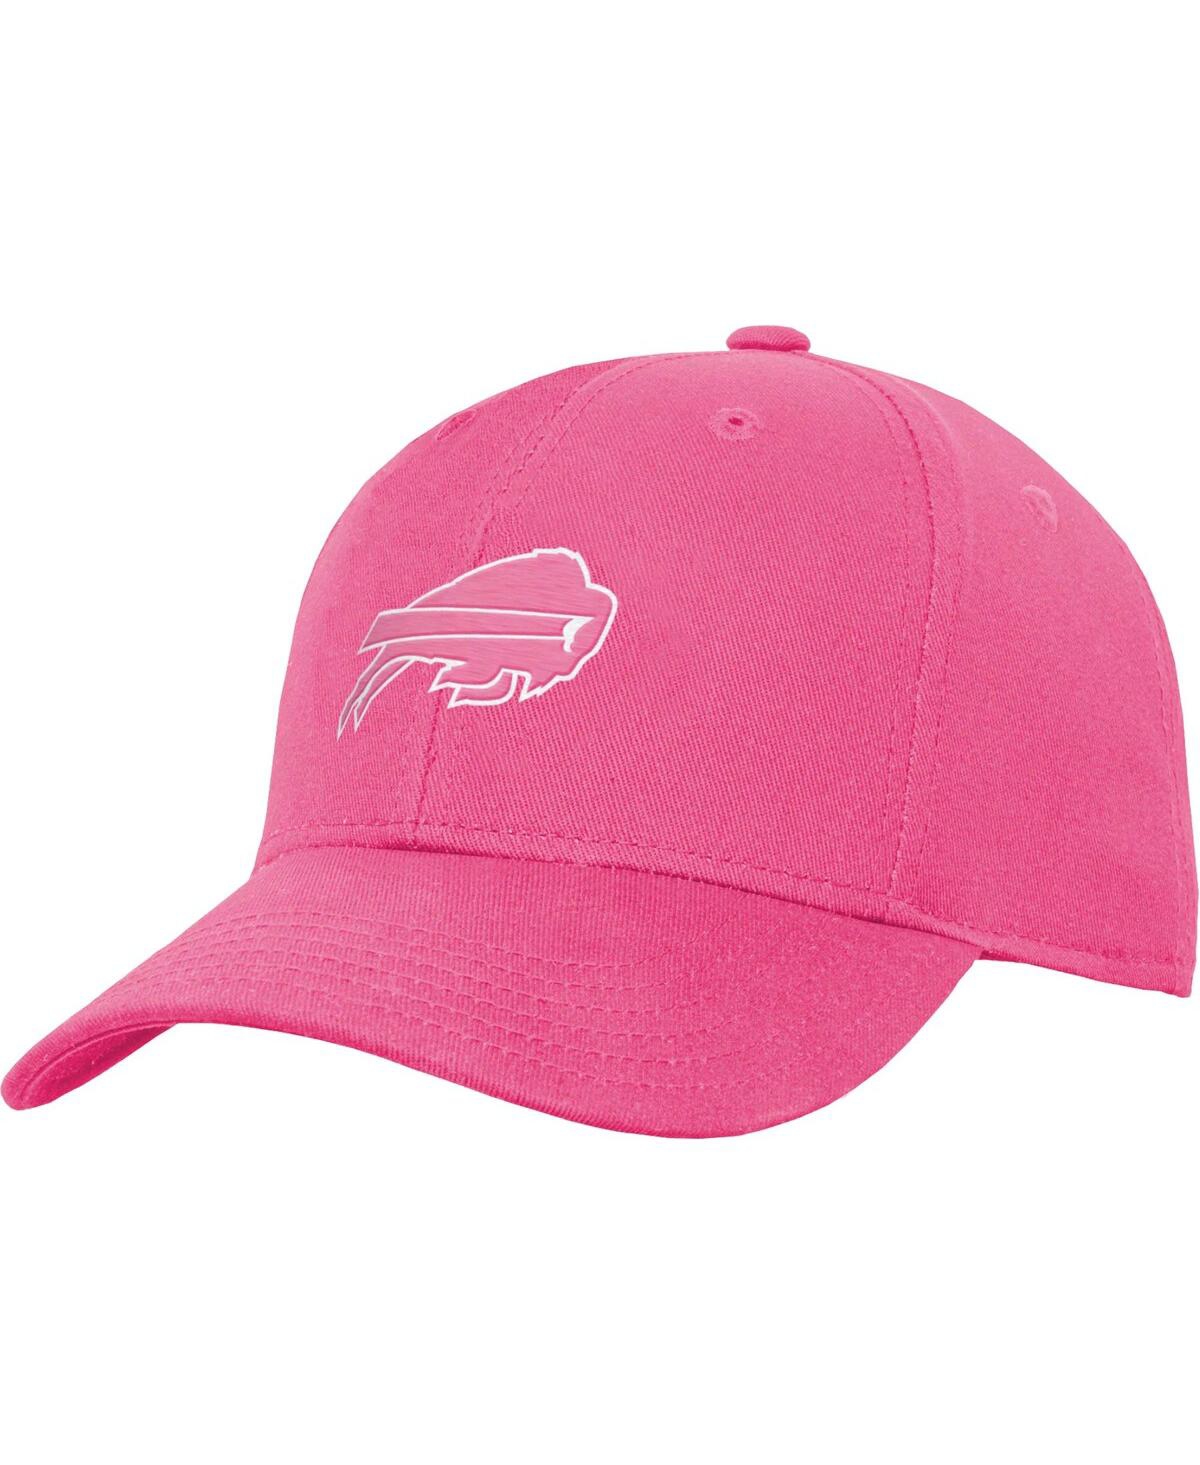 Outerstuff Kids' Big Girls Pink Buffalo Bills Adjustable Hat